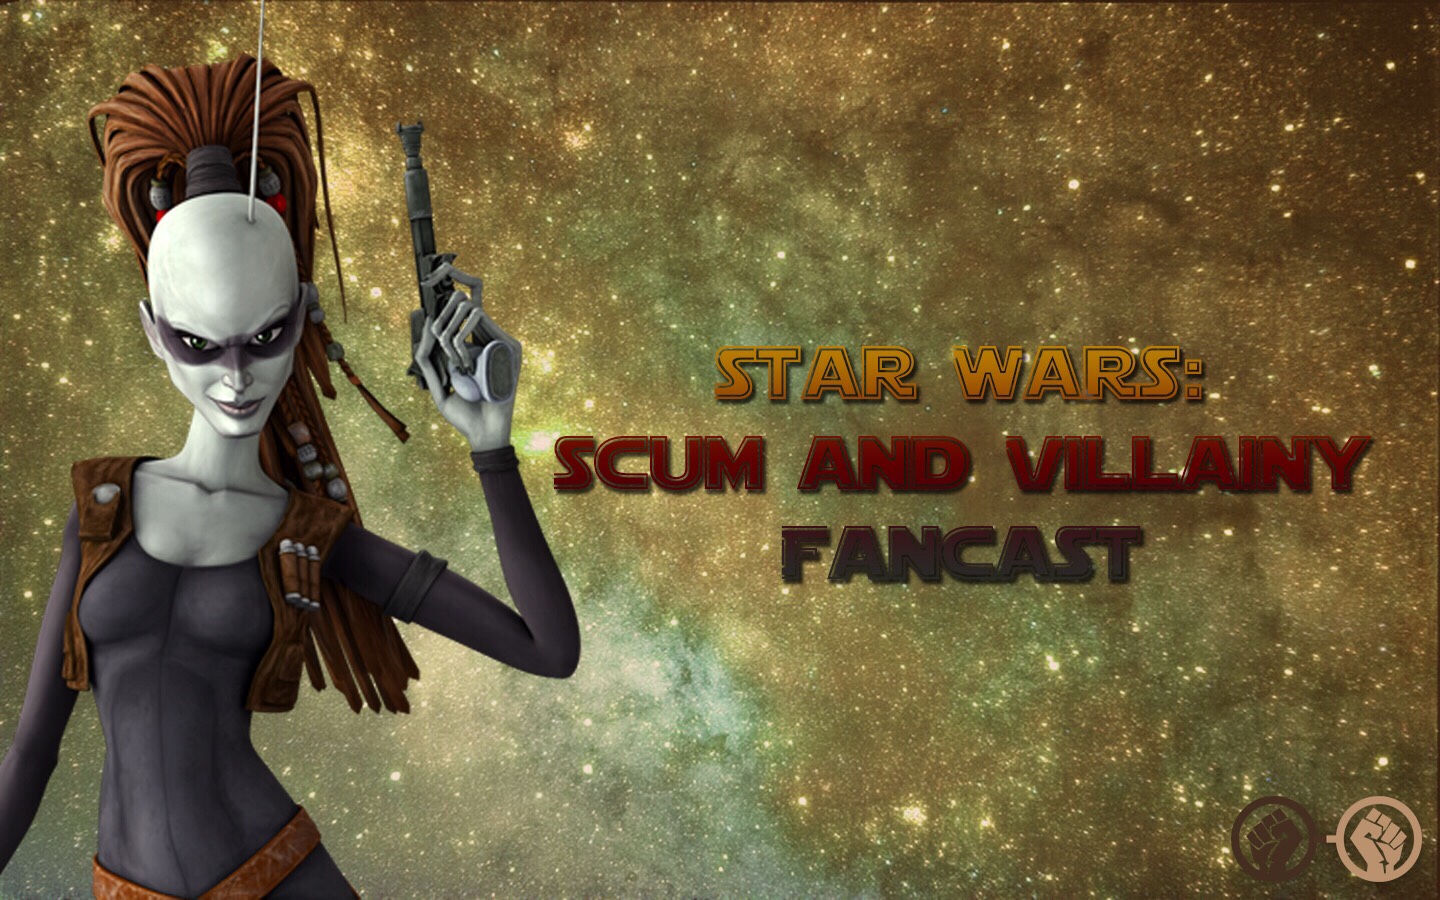 Star Wars: Scum & Villainy Fancast